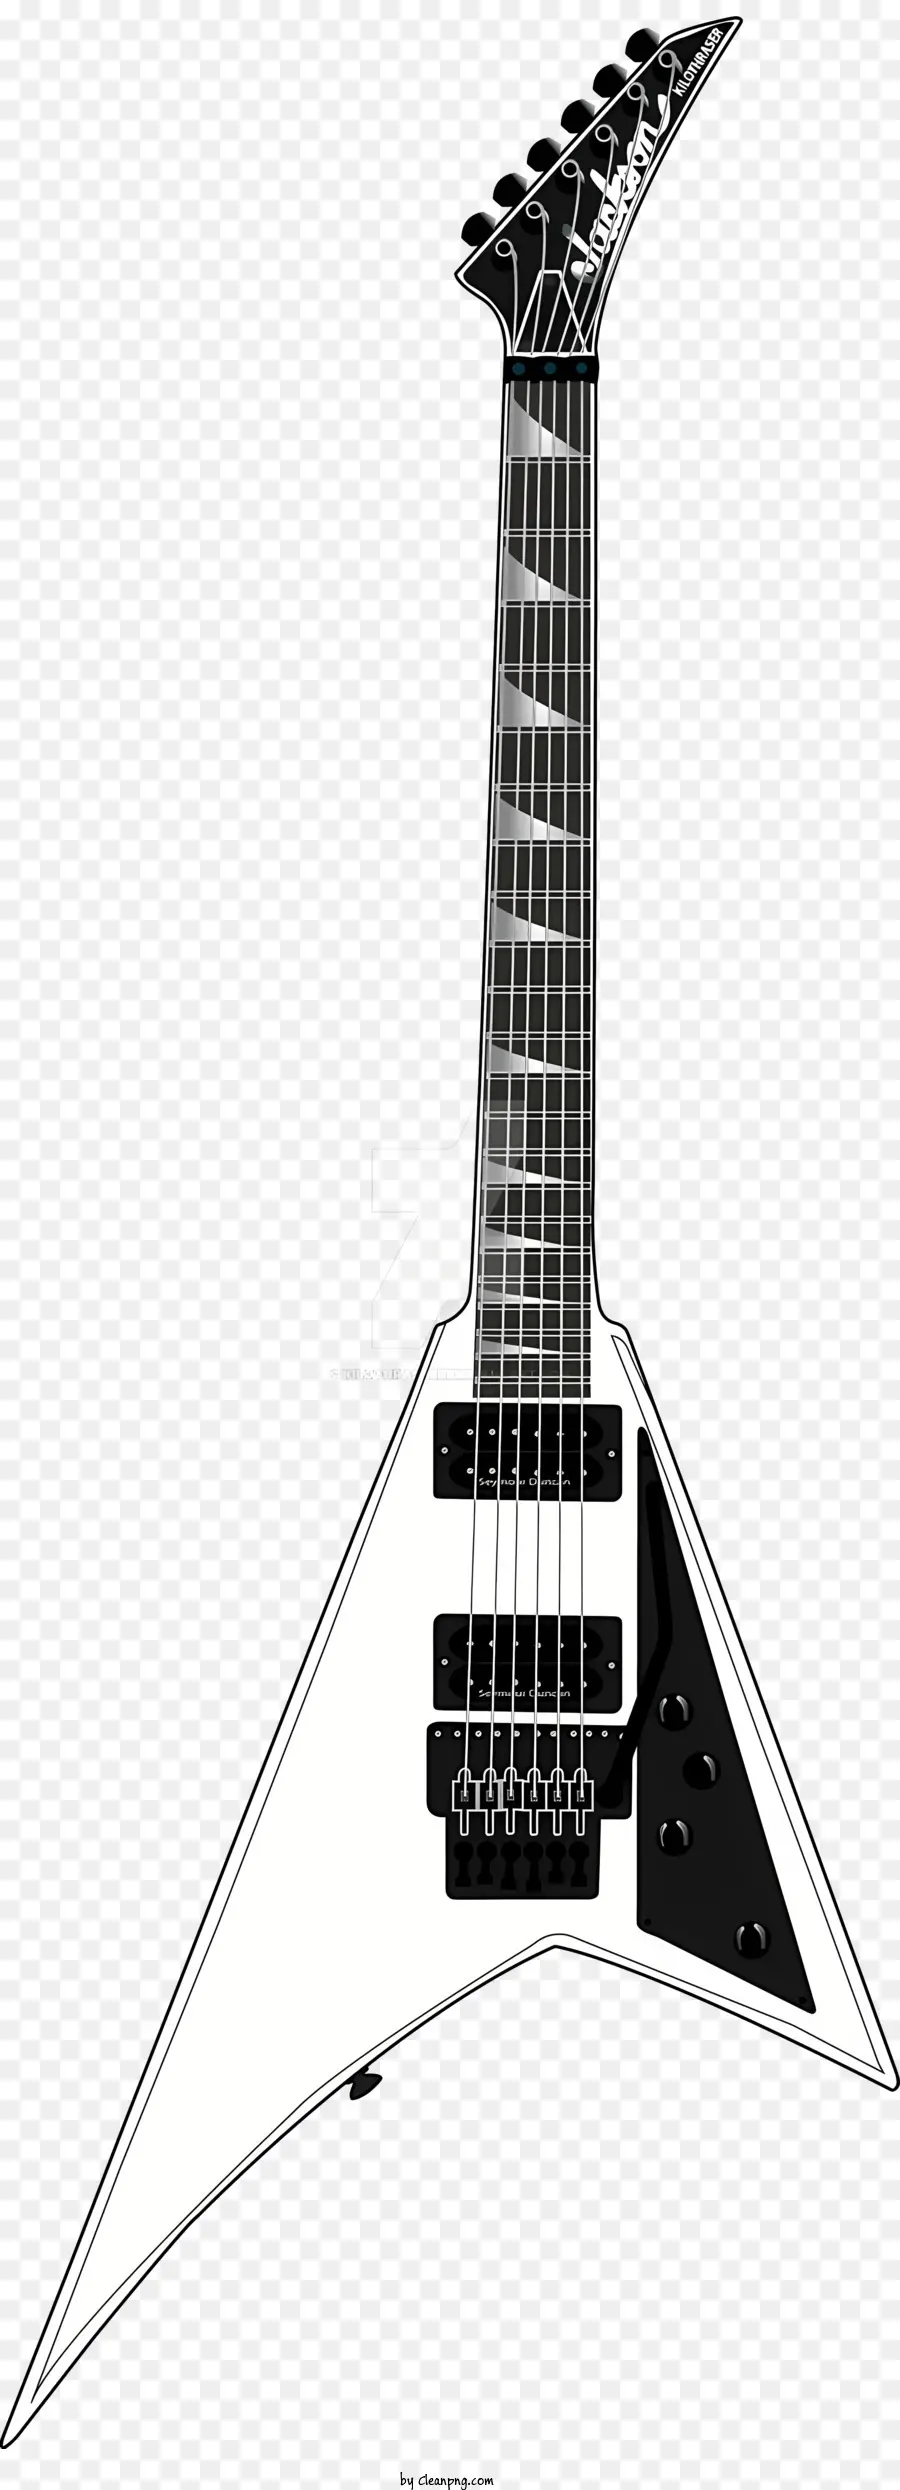 music musical instrument white guitar black body chrome fretboard